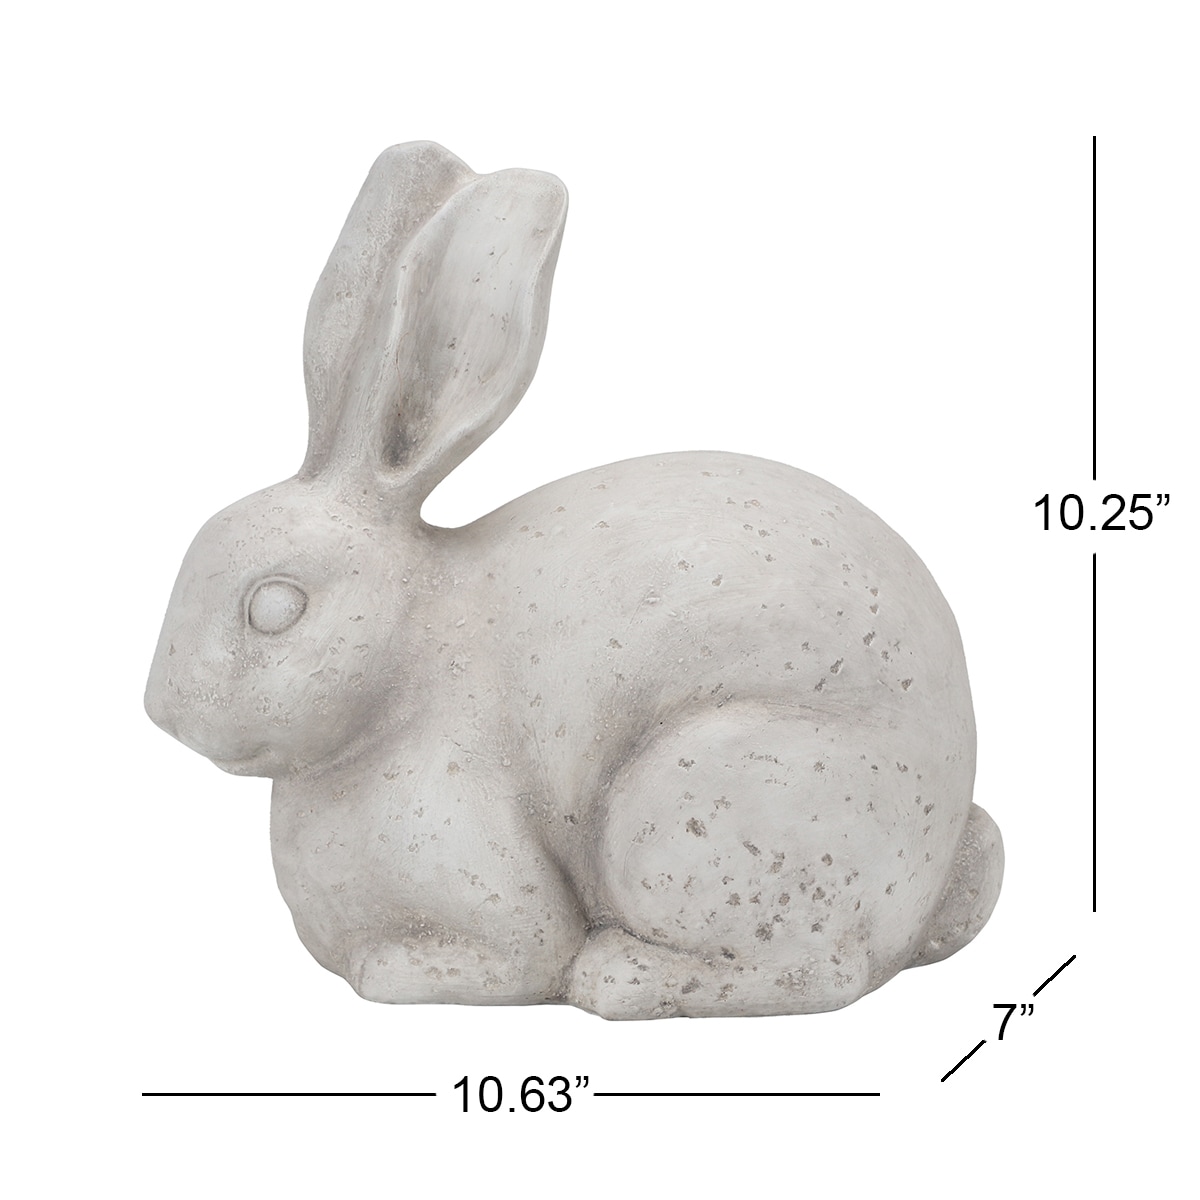 Bunny Rabbit Statue Brushed Porcelain Garden Home Decor Easter 